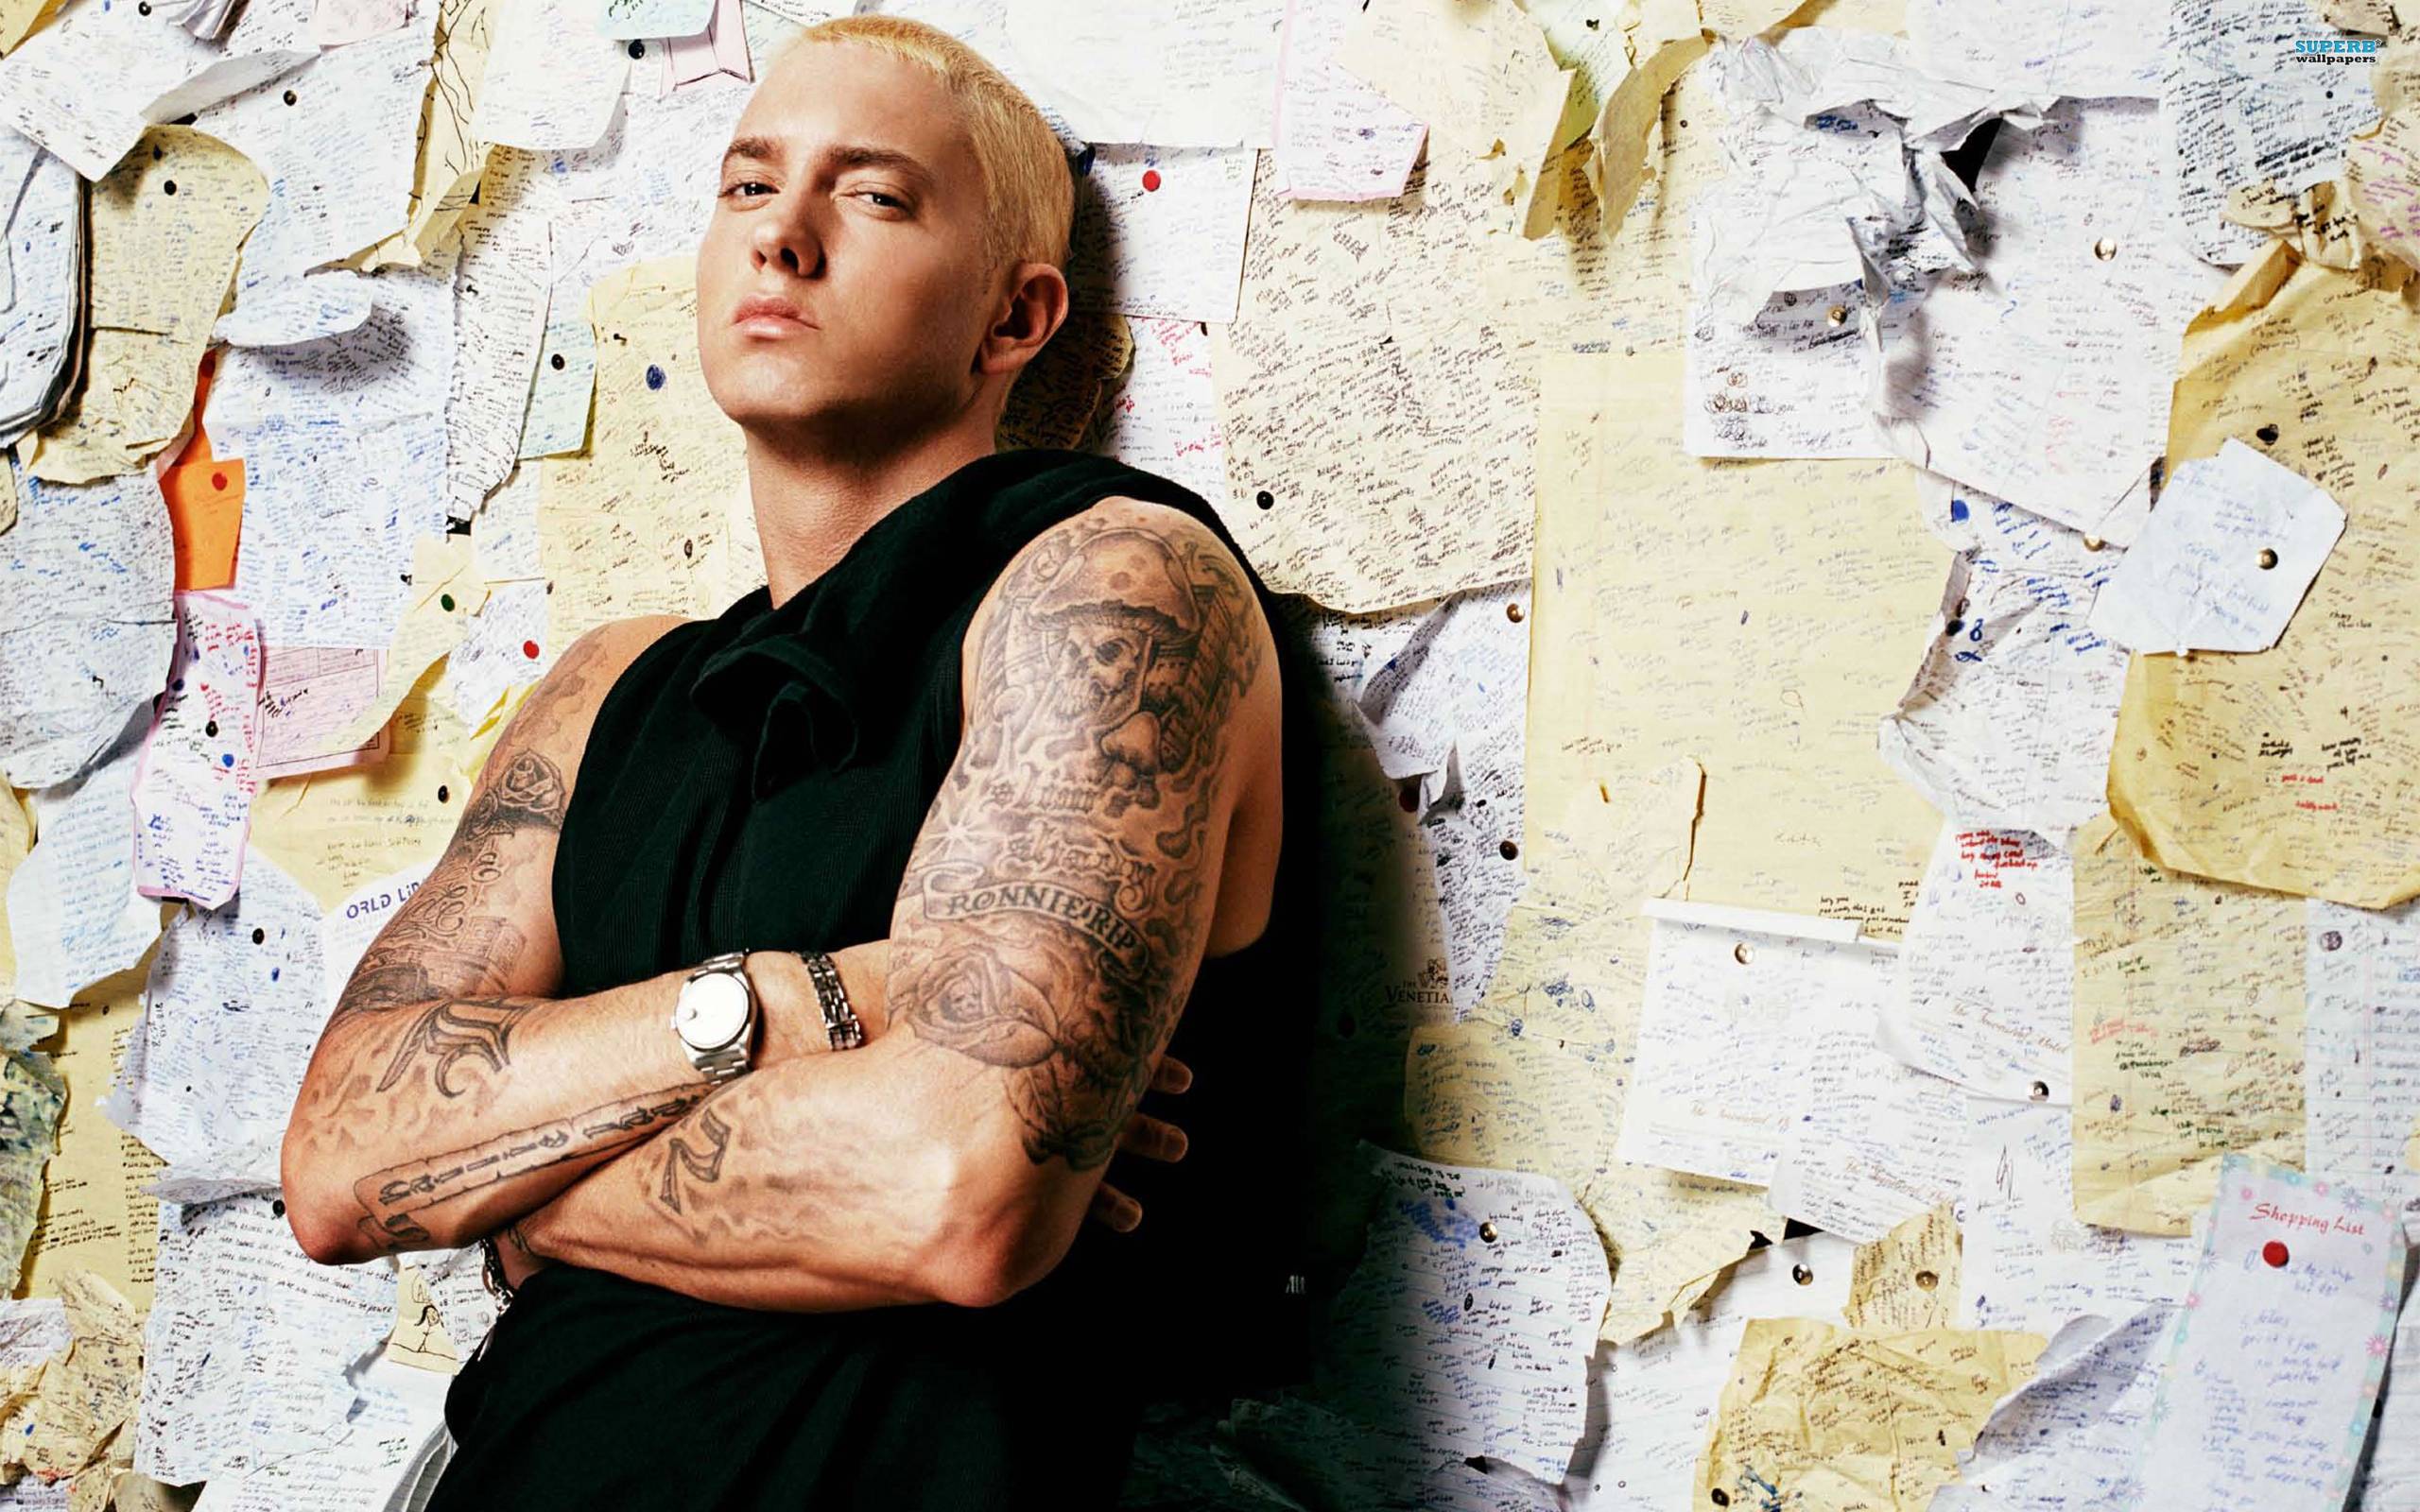 Wallpaper ID 475830  Music Eminem Phone Wallpaper  720x1280 free  download